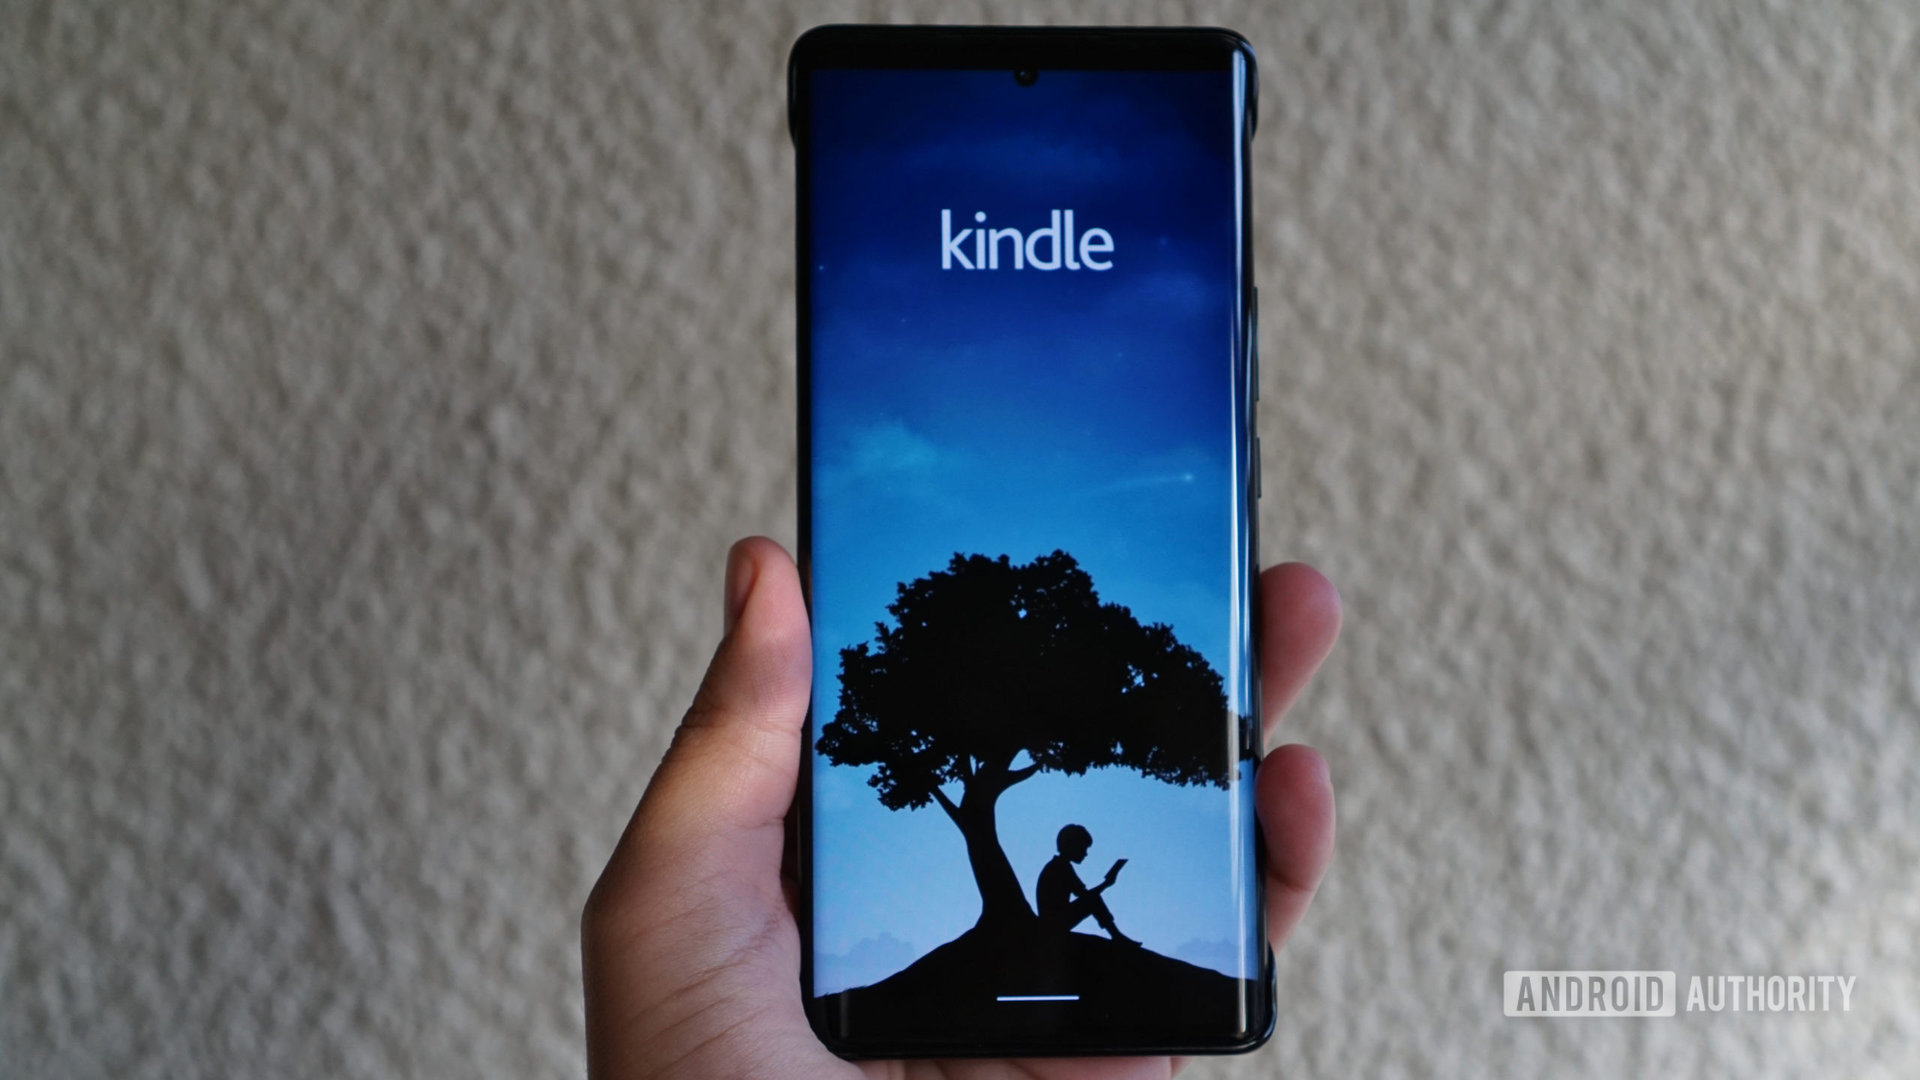 Amazon Kindle app on Android smartphone